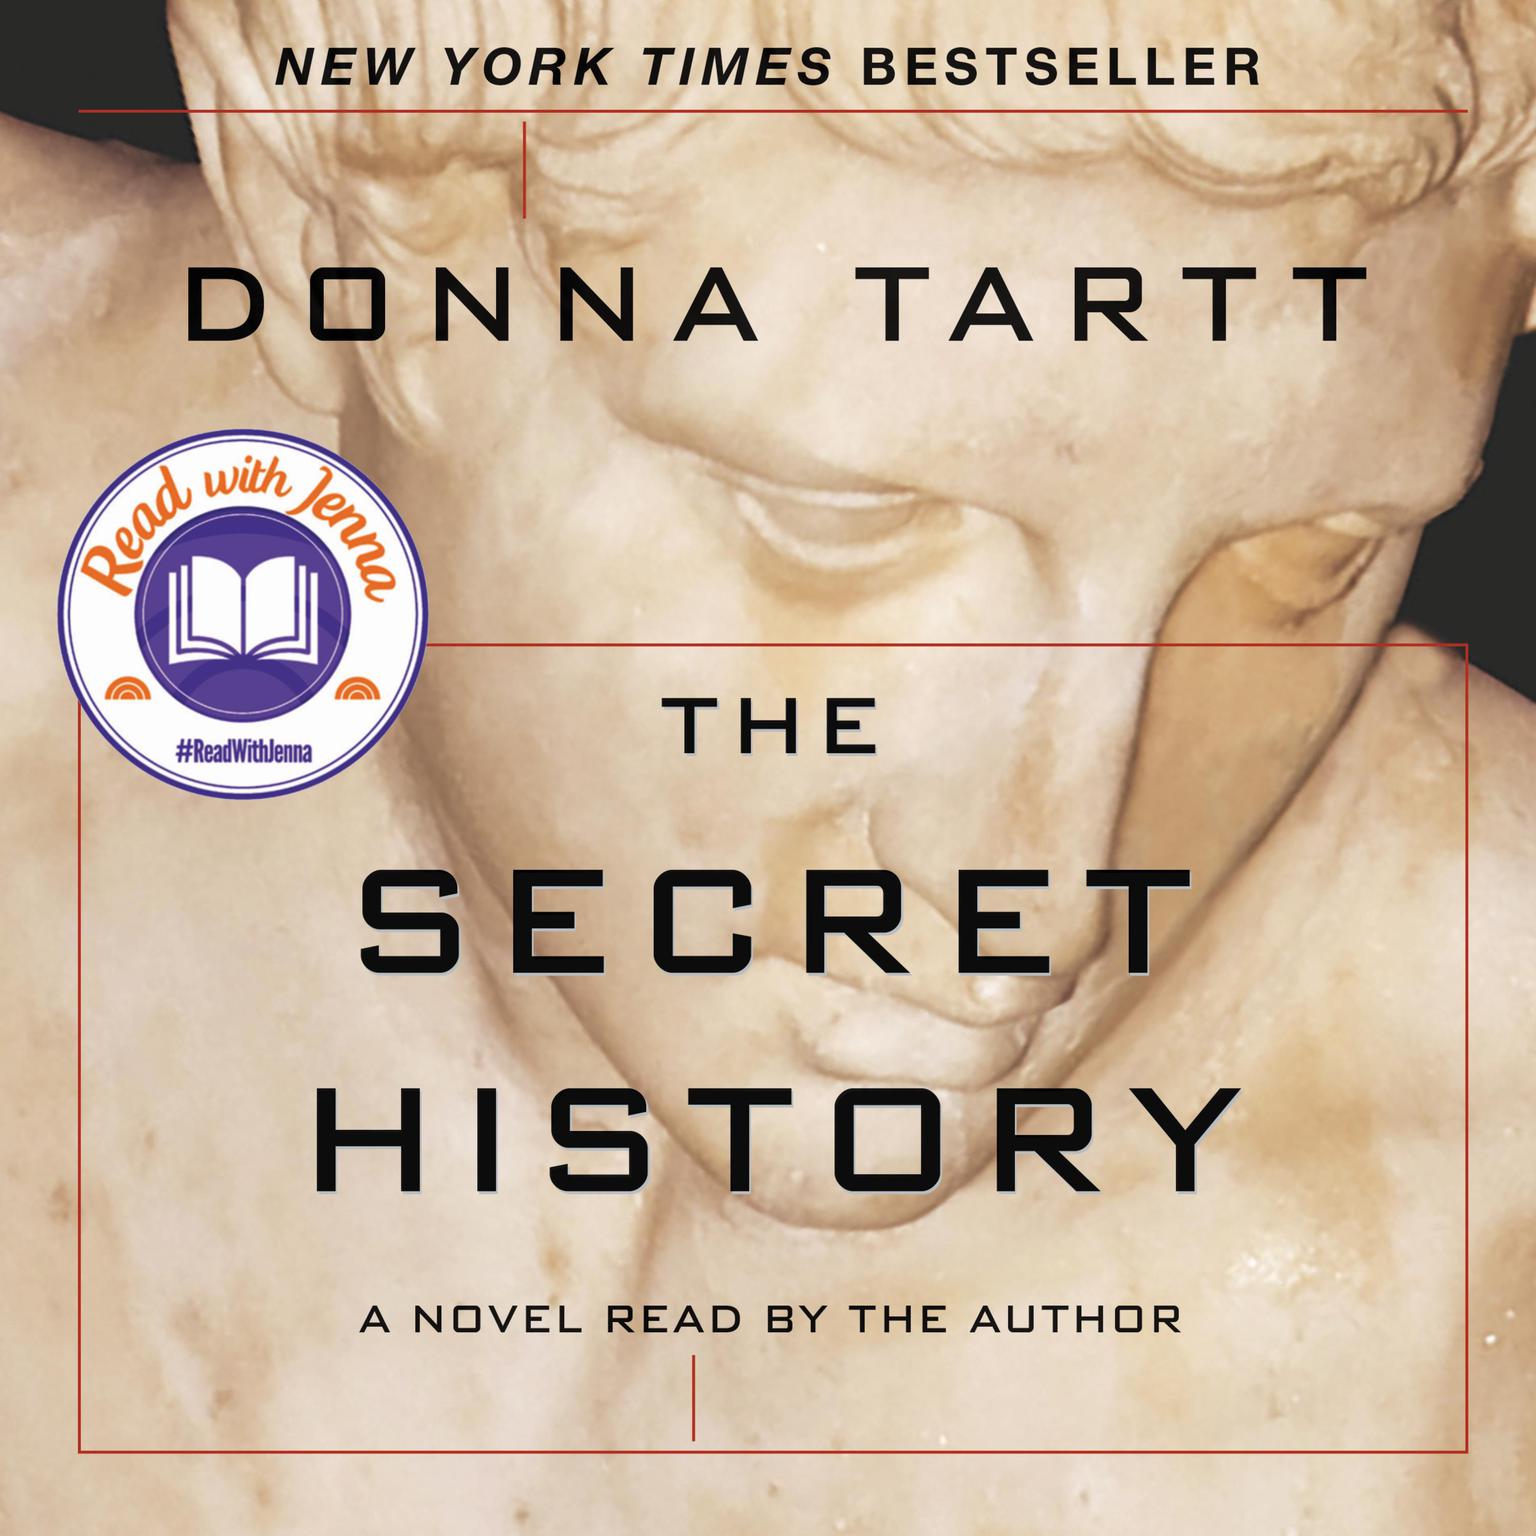 The Secret History: A Novel Audiobook, by Donna Tartt